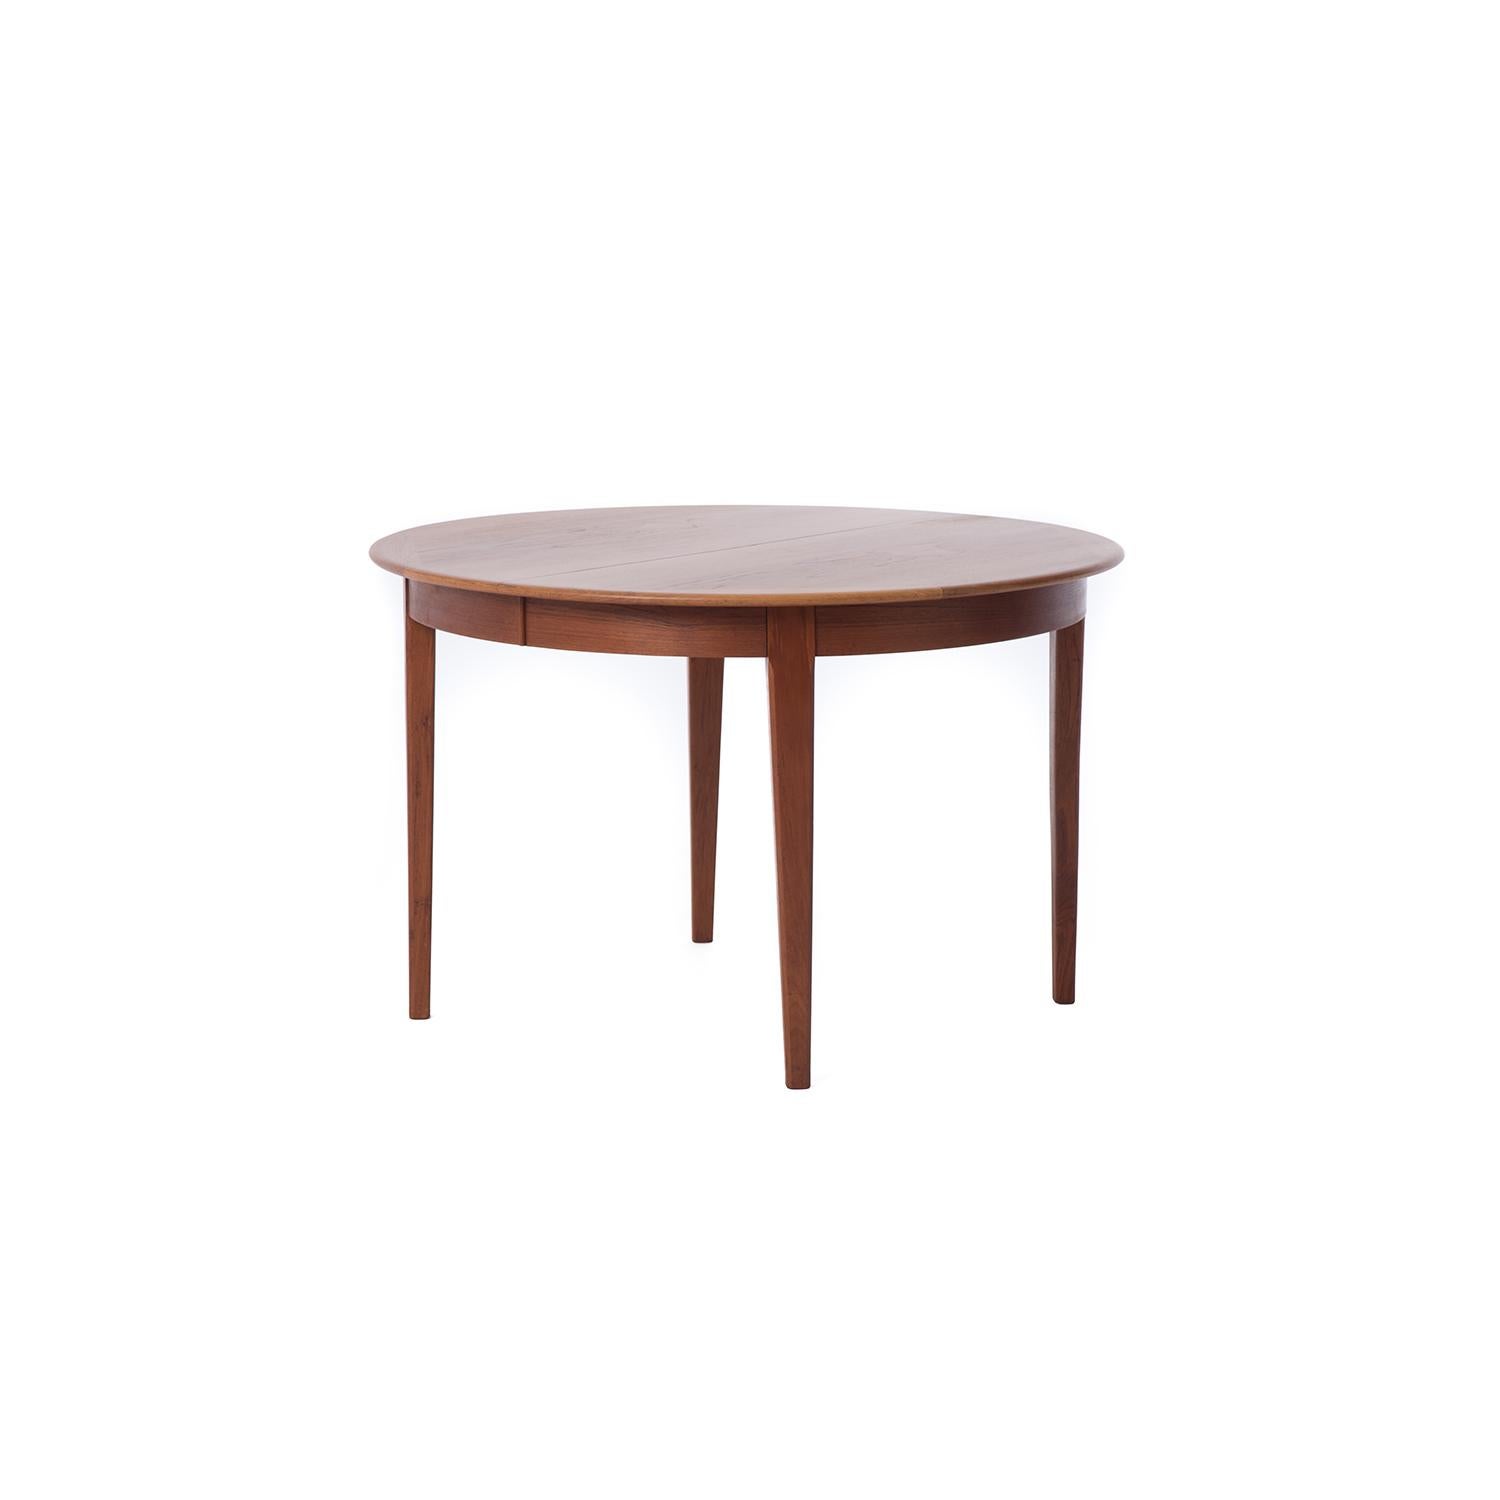 Scandinavian Modern Danish Modern Round Teak Table with Edge Band Detail